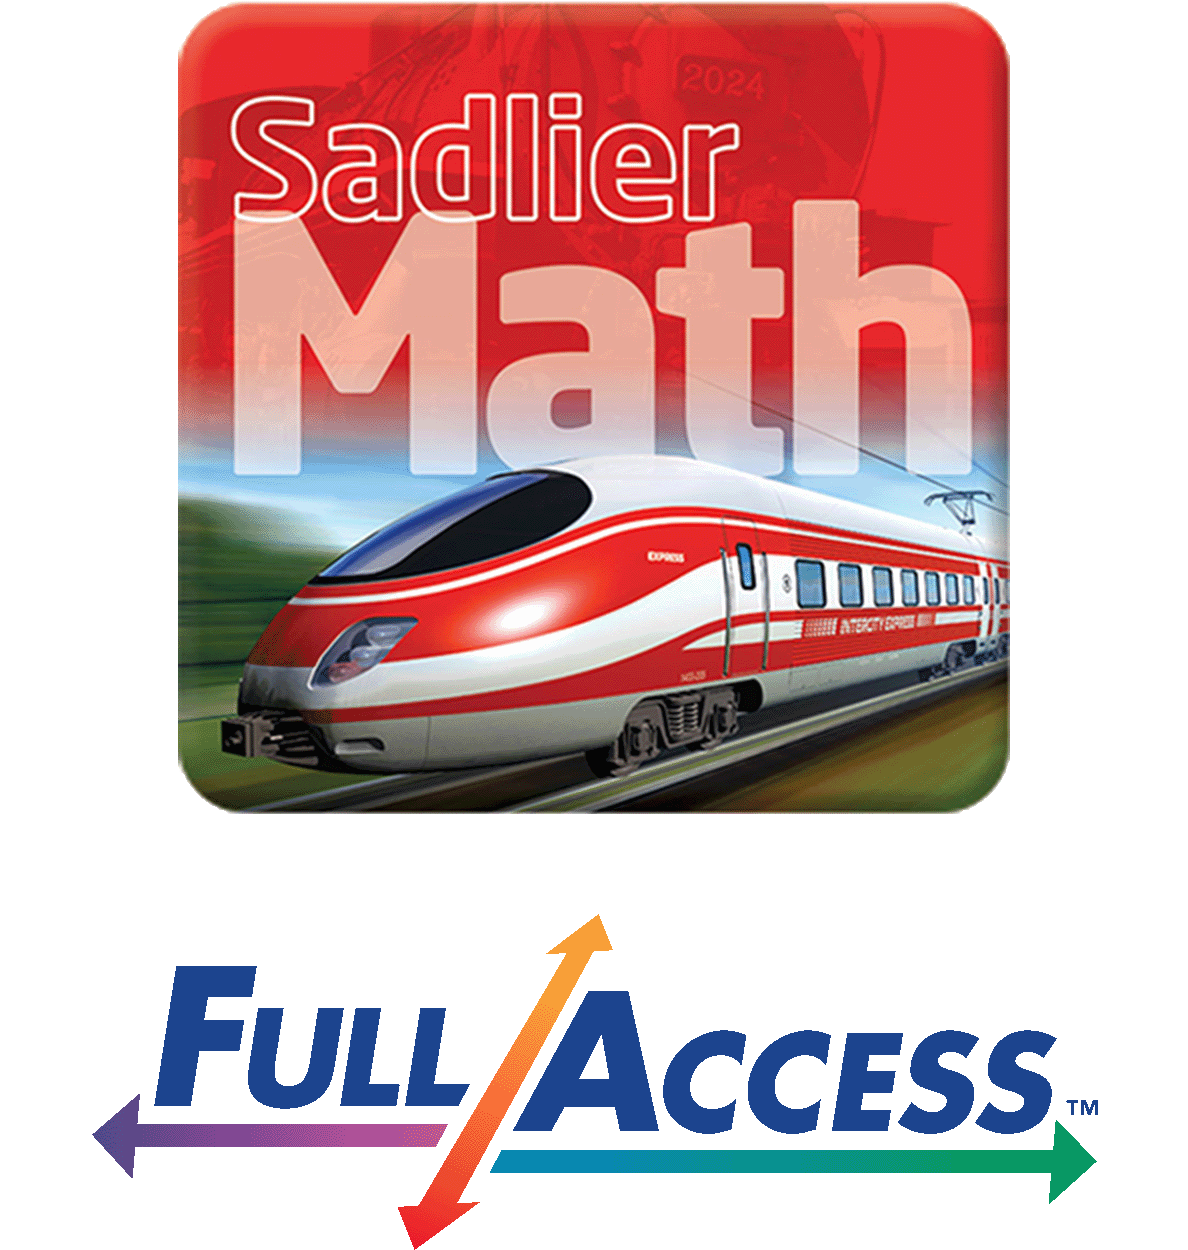 Full_Access_Sadlier_Math